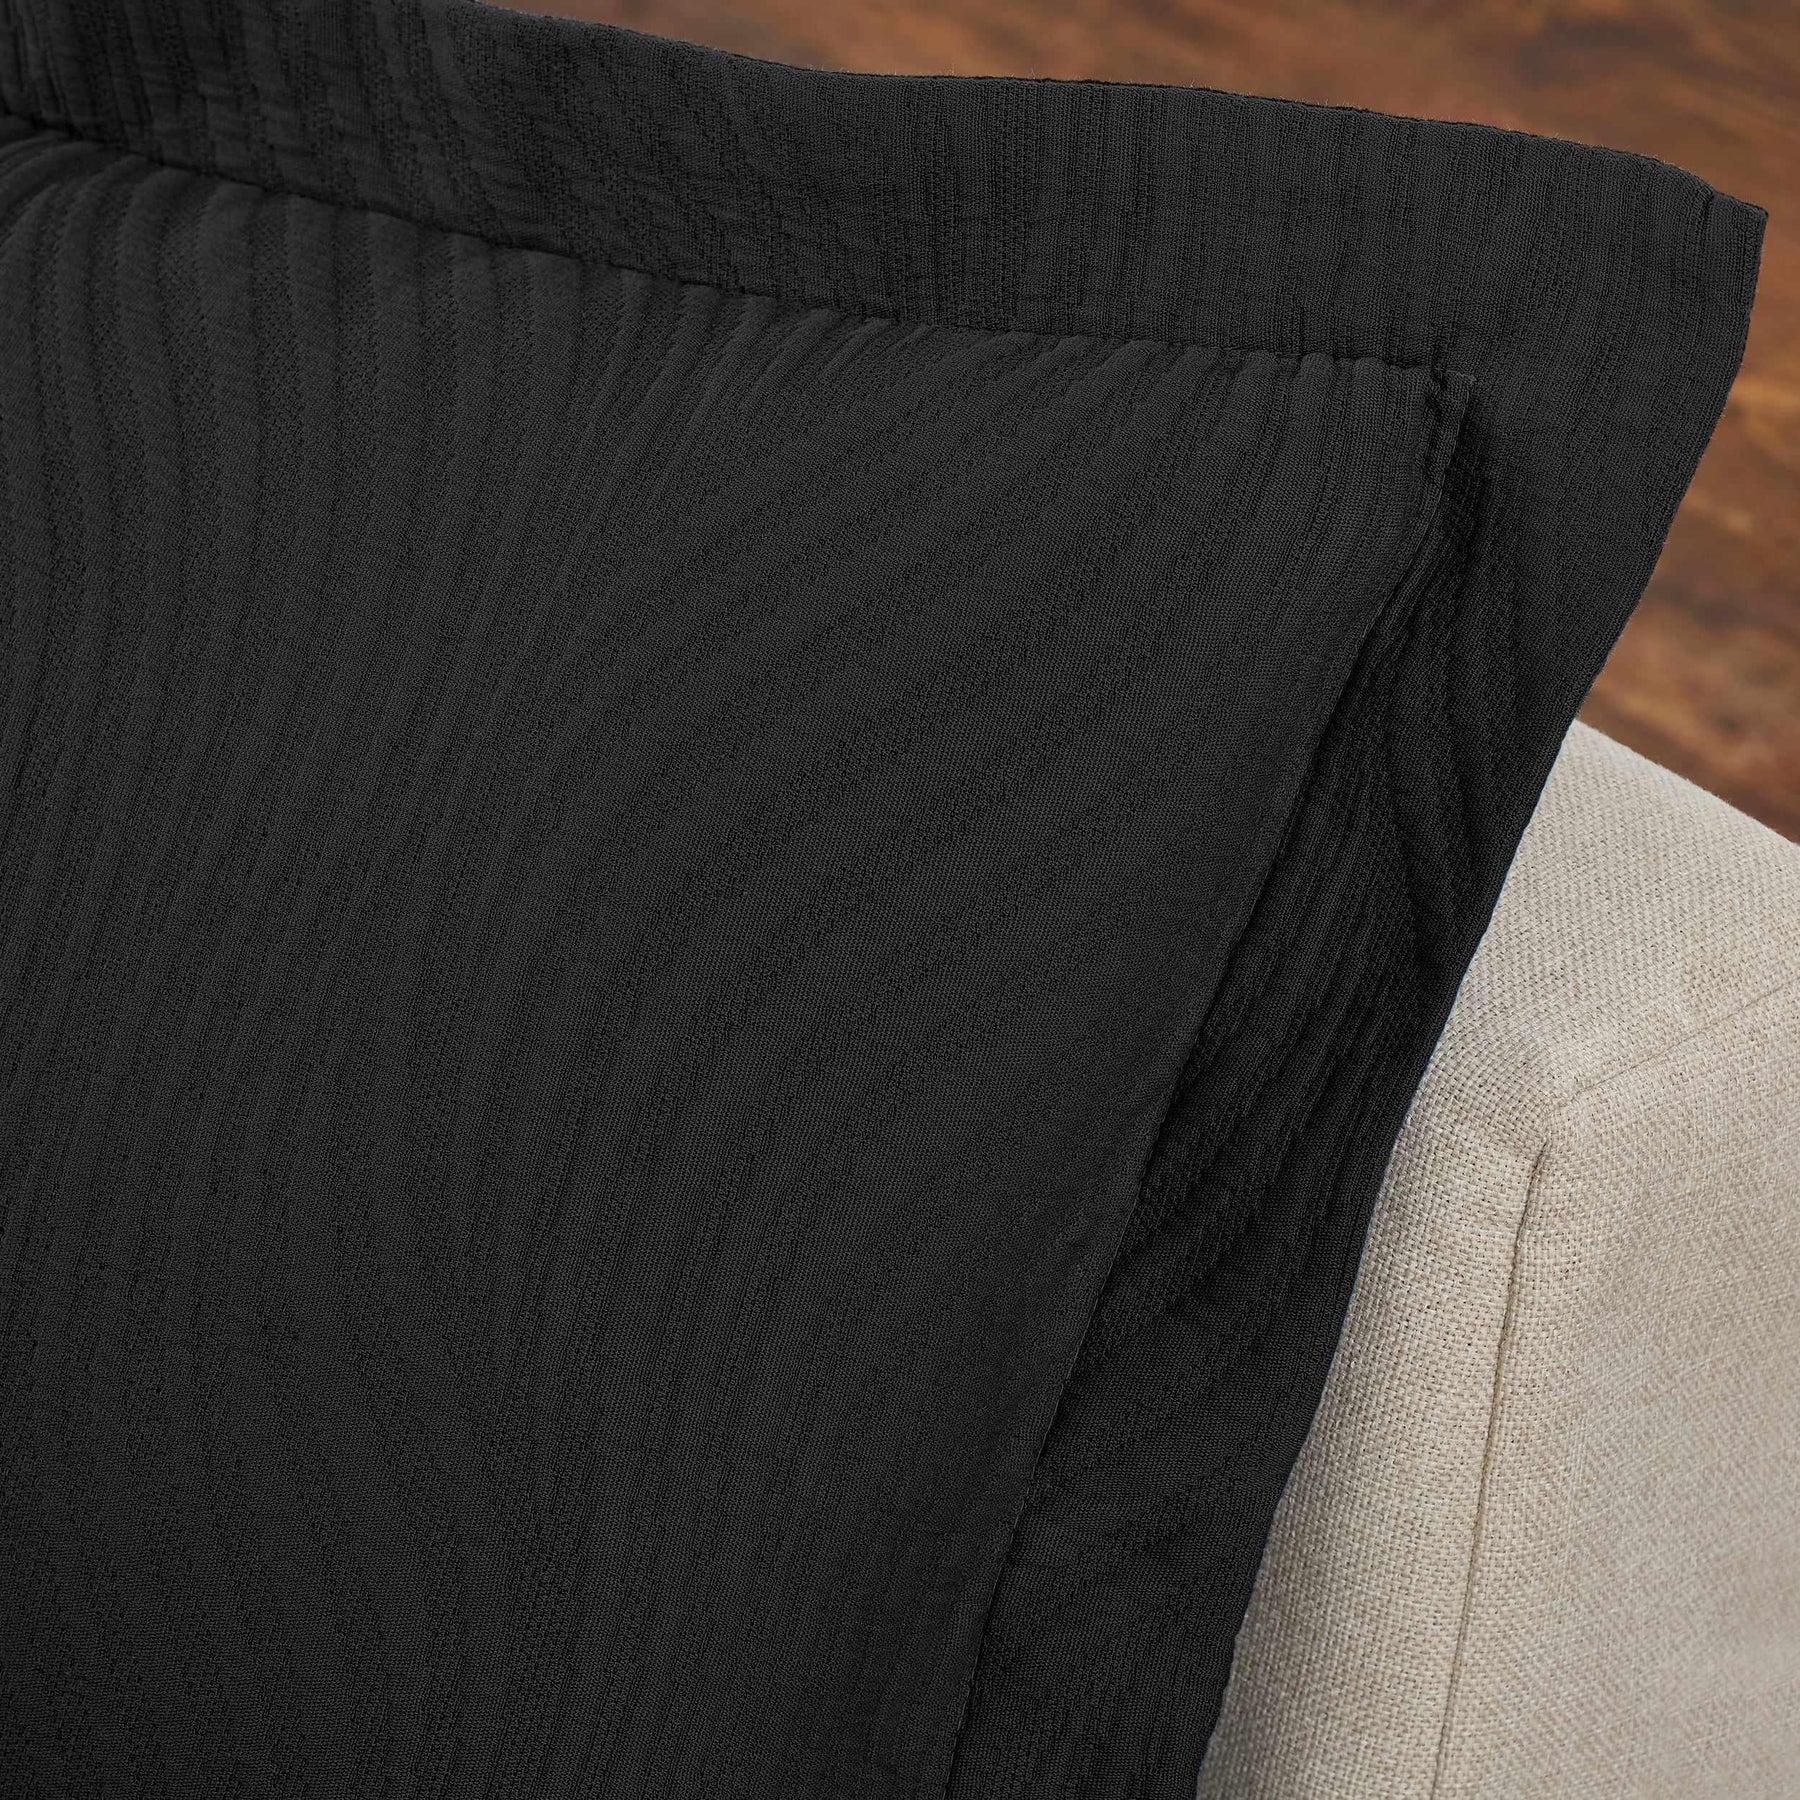 Cascade Cotton Jacquard Matelasse 3-Piece Bedspread Set - Black